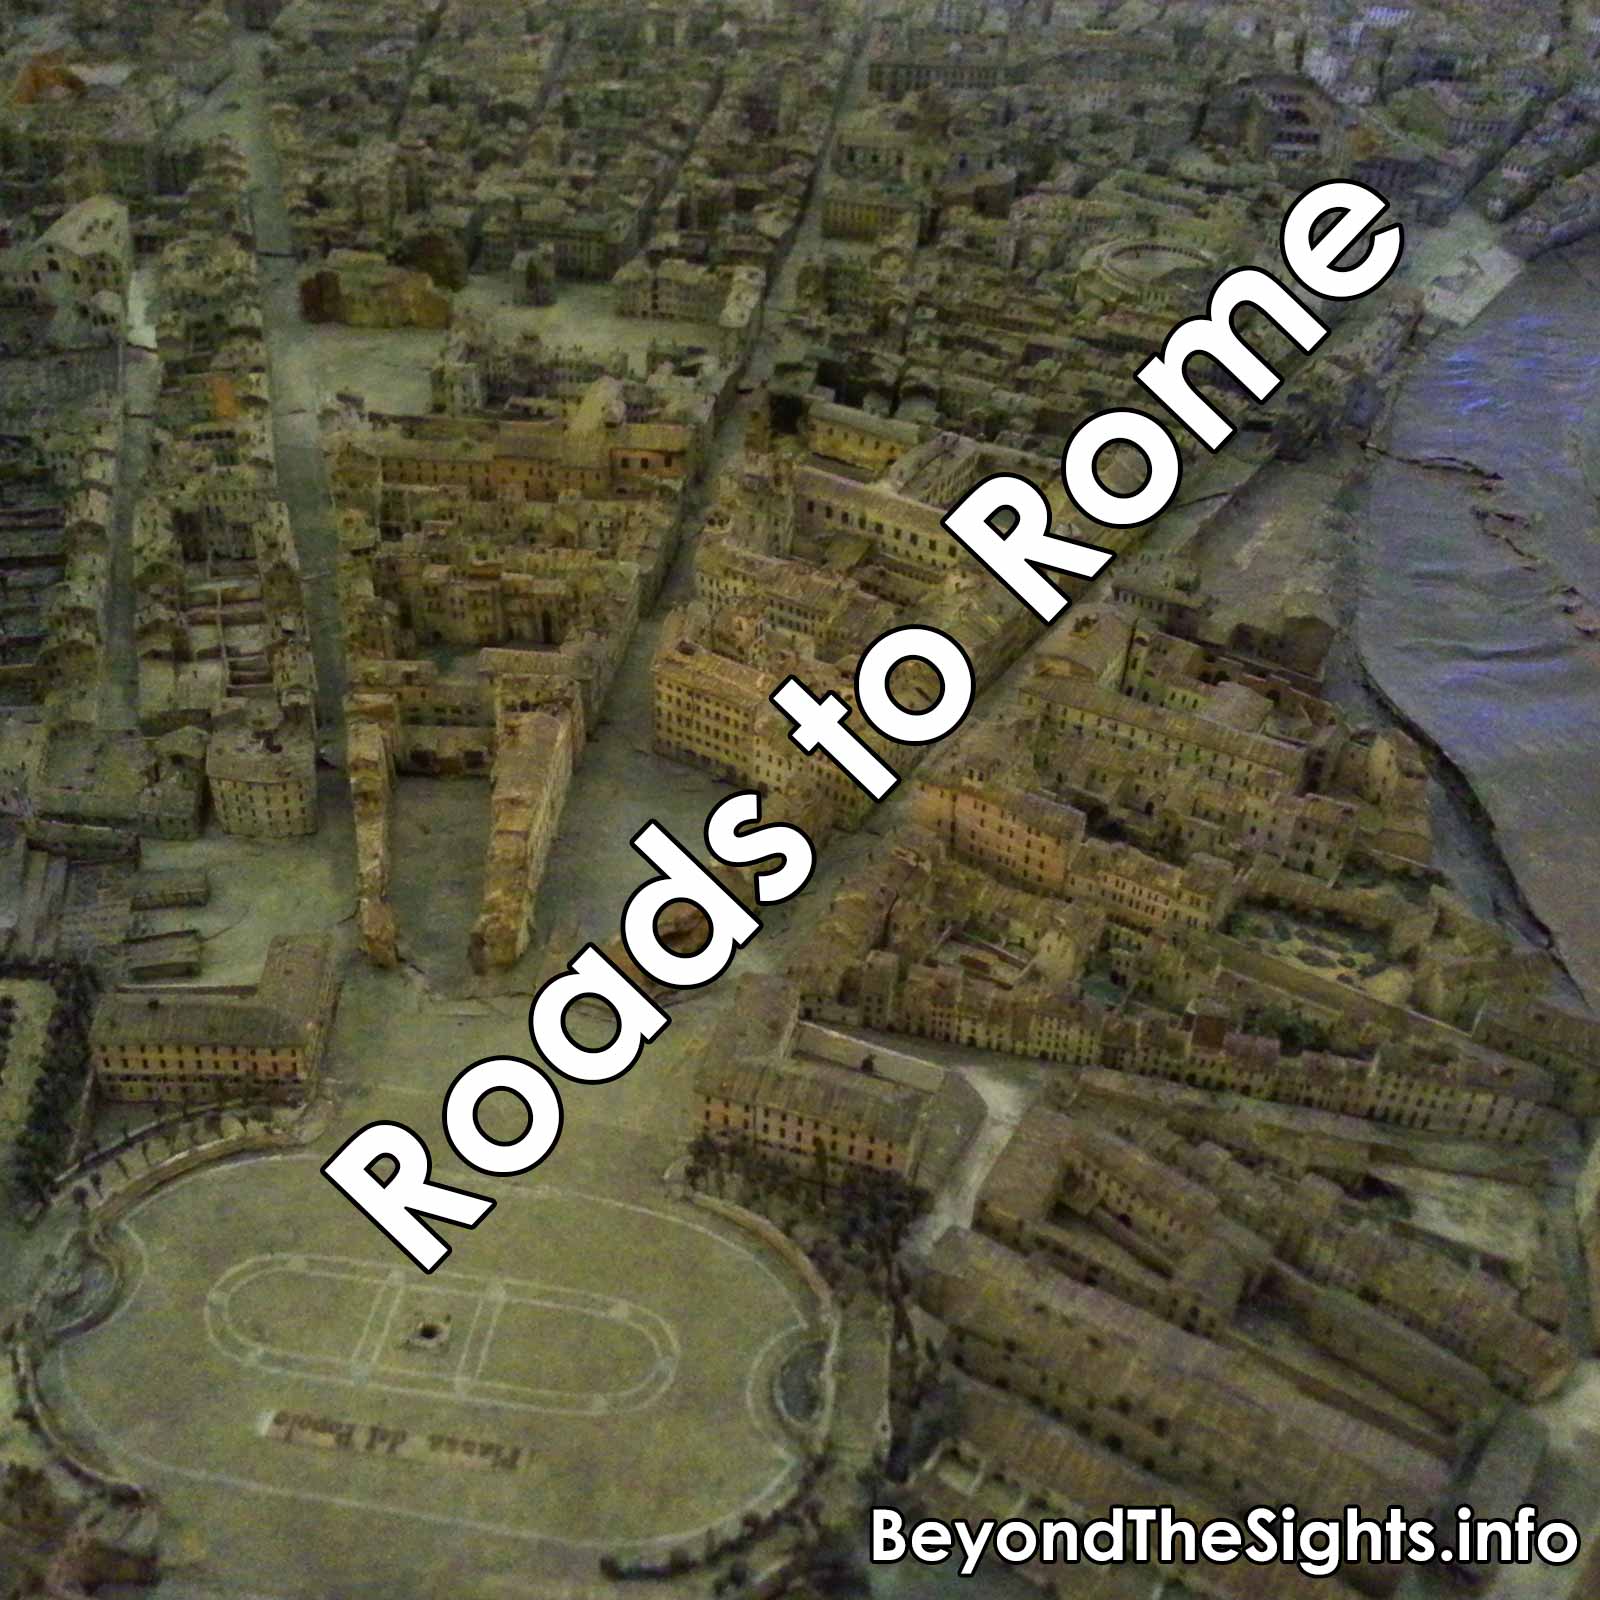 Roads to Rome